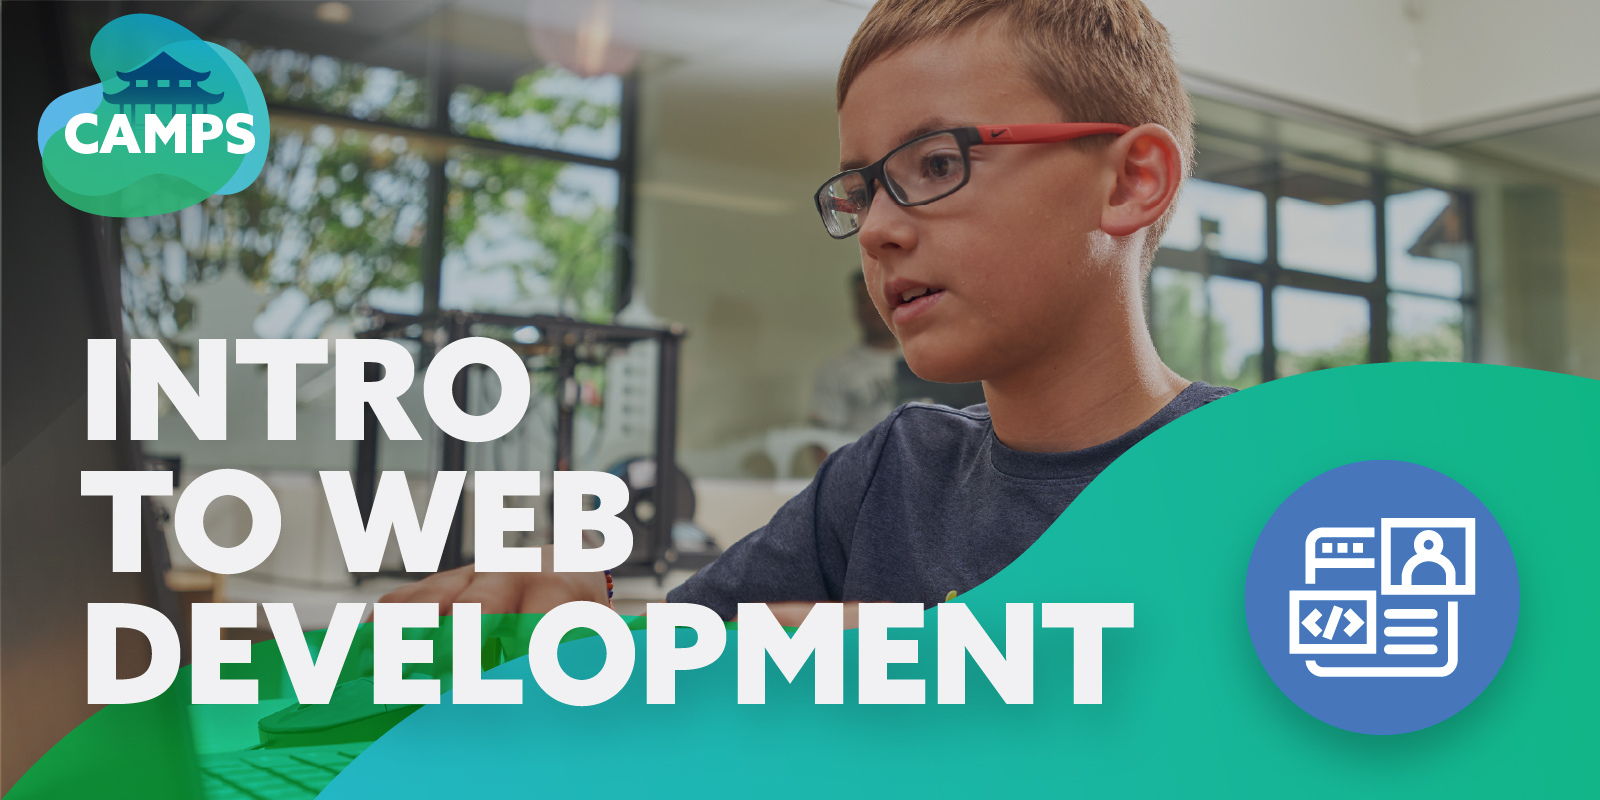 Intro to Web Development promotional image